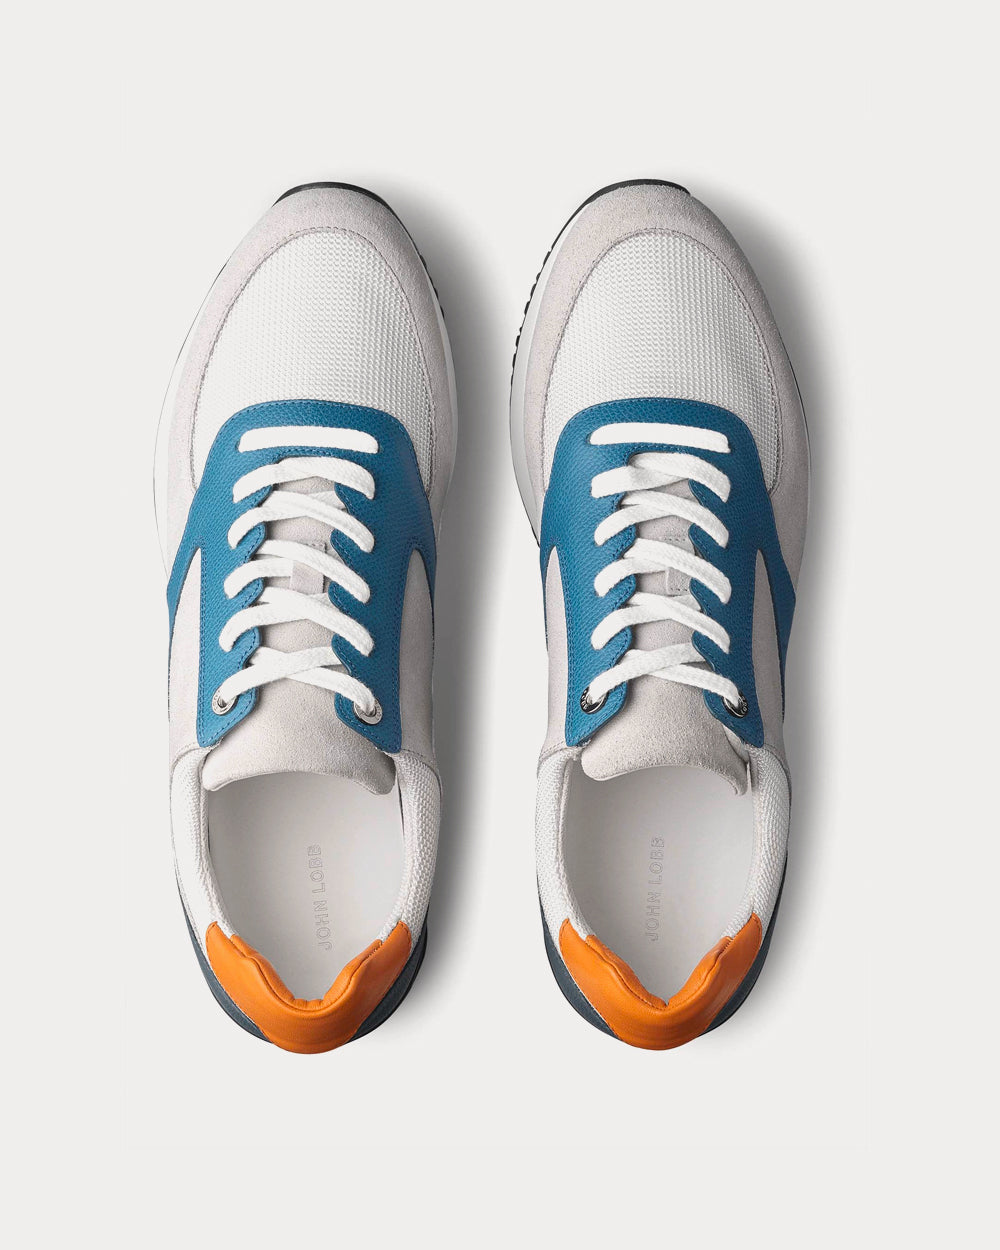 John Lobb - Foundry Blue / White / Orange Cross Grain Low Top Sneakers